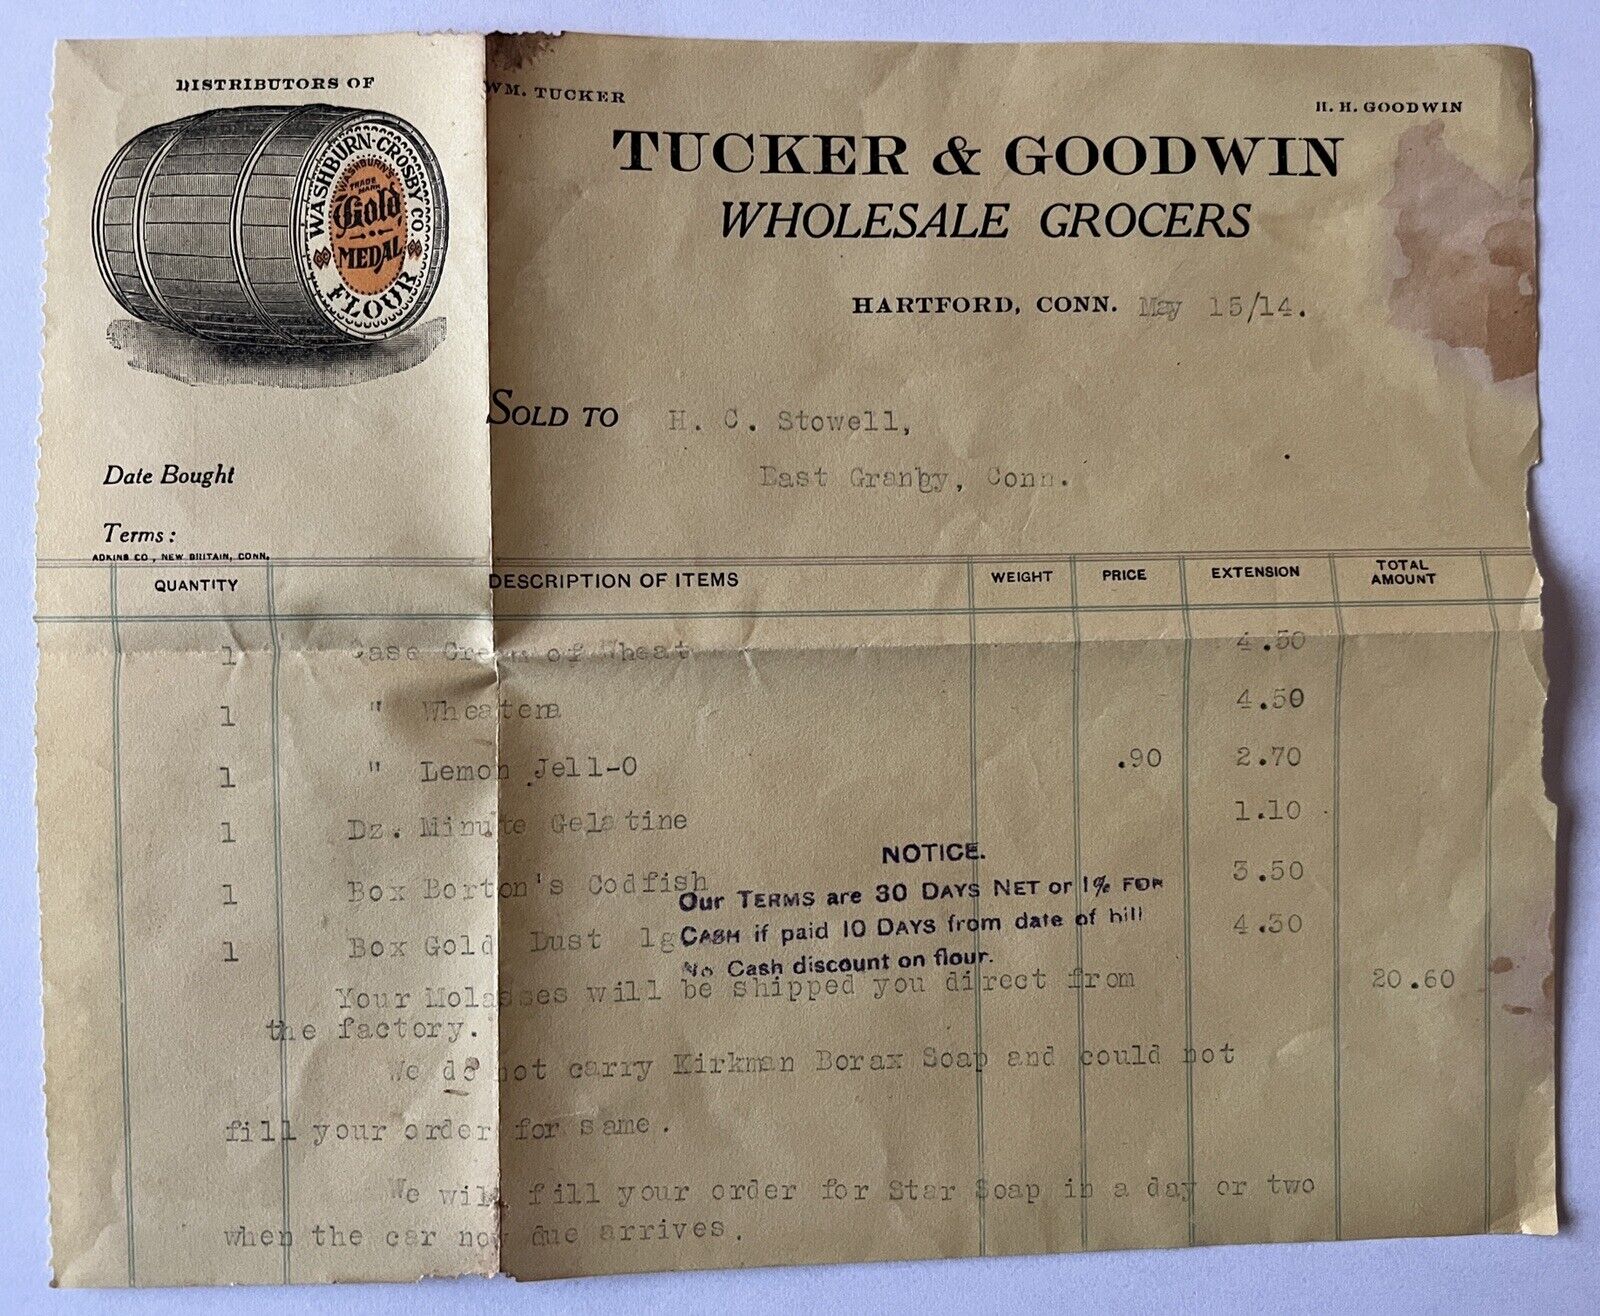 RARE 1914 TUCKER & GOODWIN GROCERS CT. RECEIPT JELLO, GOLD MEDAL FLOUR BARREL